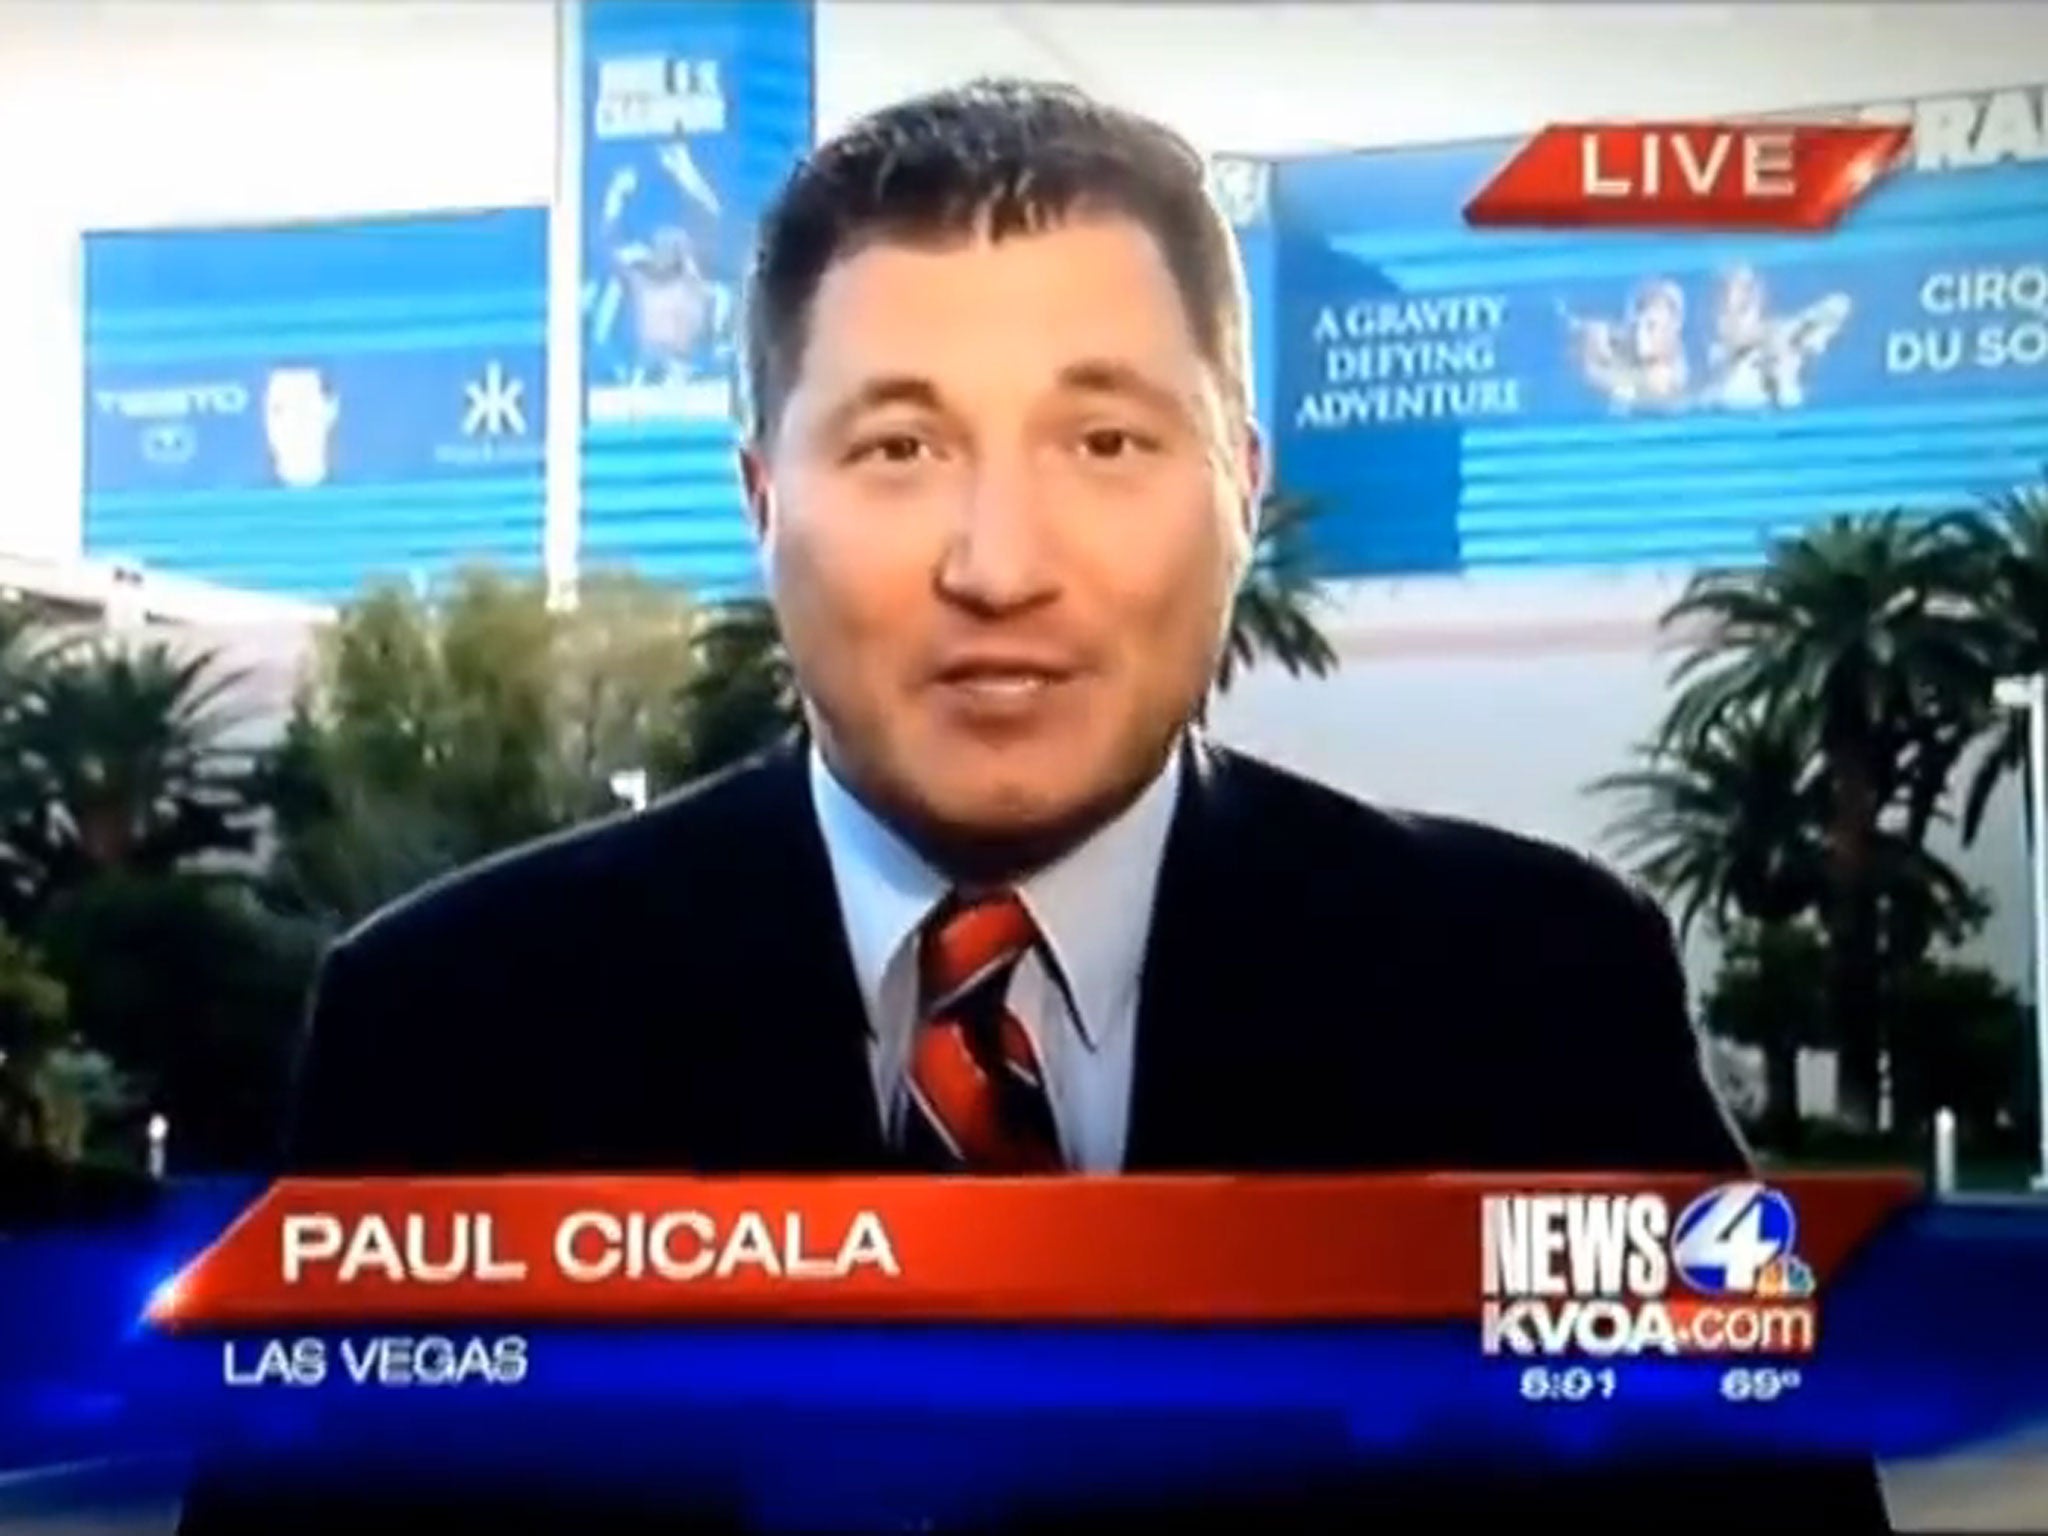 Paul Cicala, a sports reporter for News4 KVOA